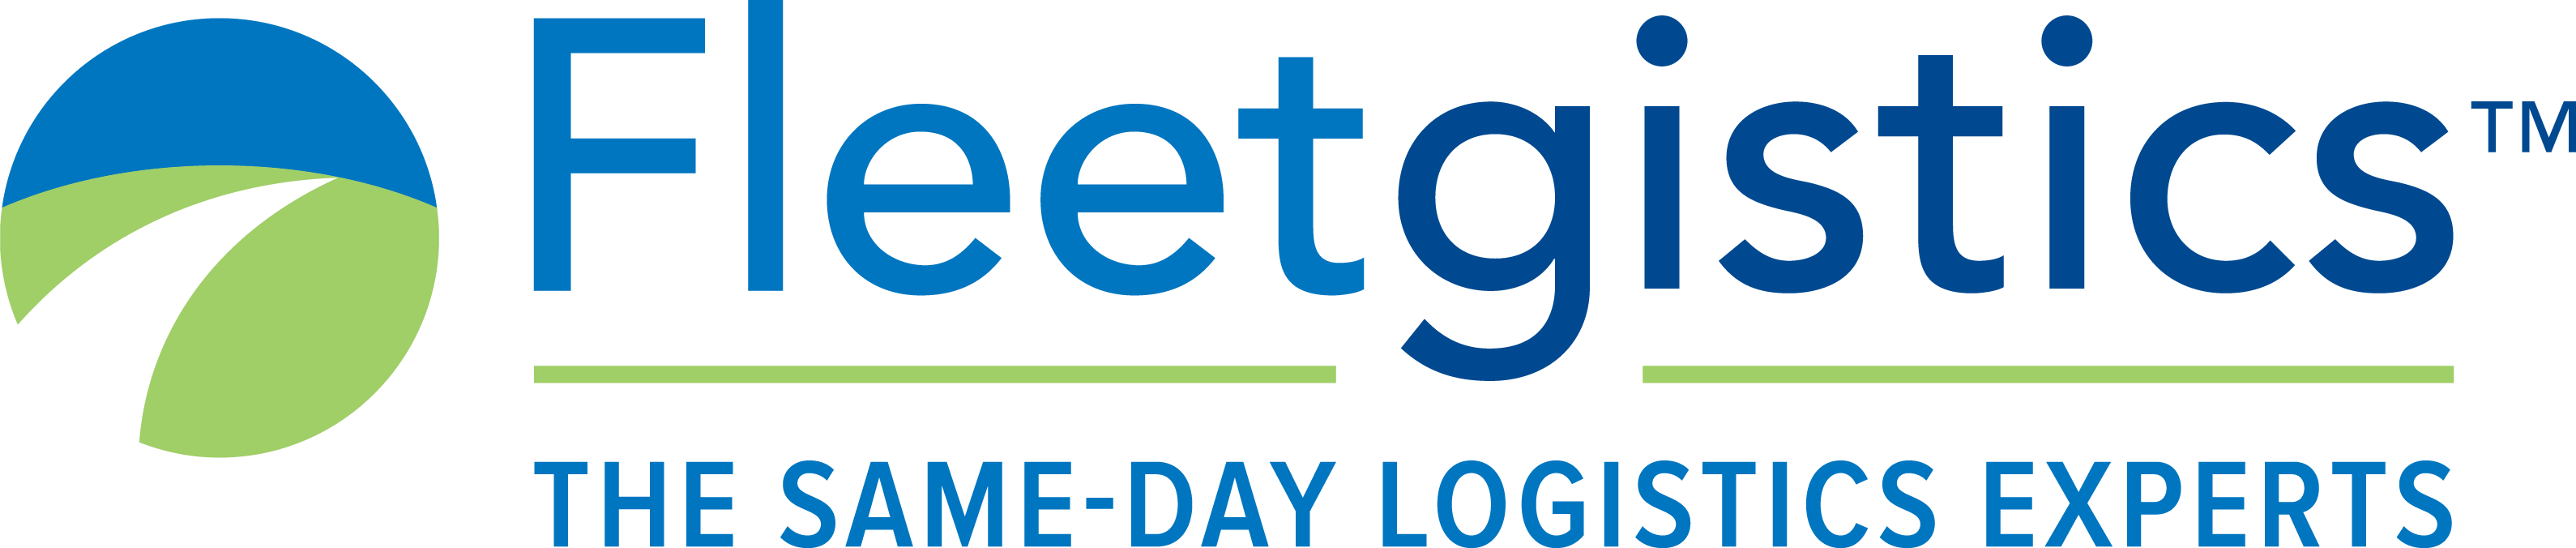 Fleetgistics logo